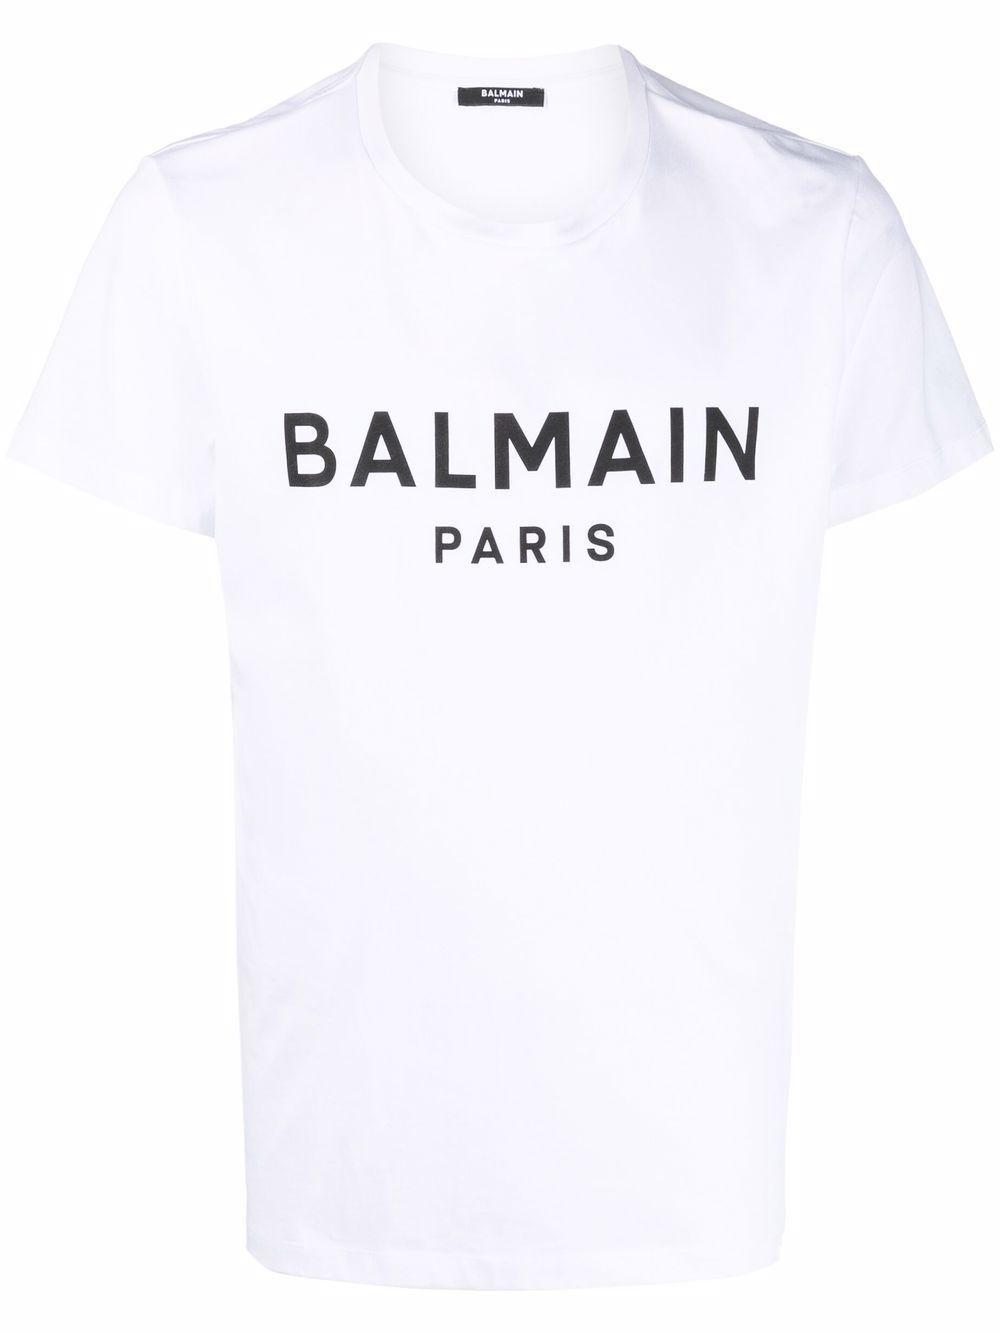 Balmain Logo Cotton T-shirt in White for Men - Save 64% | Lyst